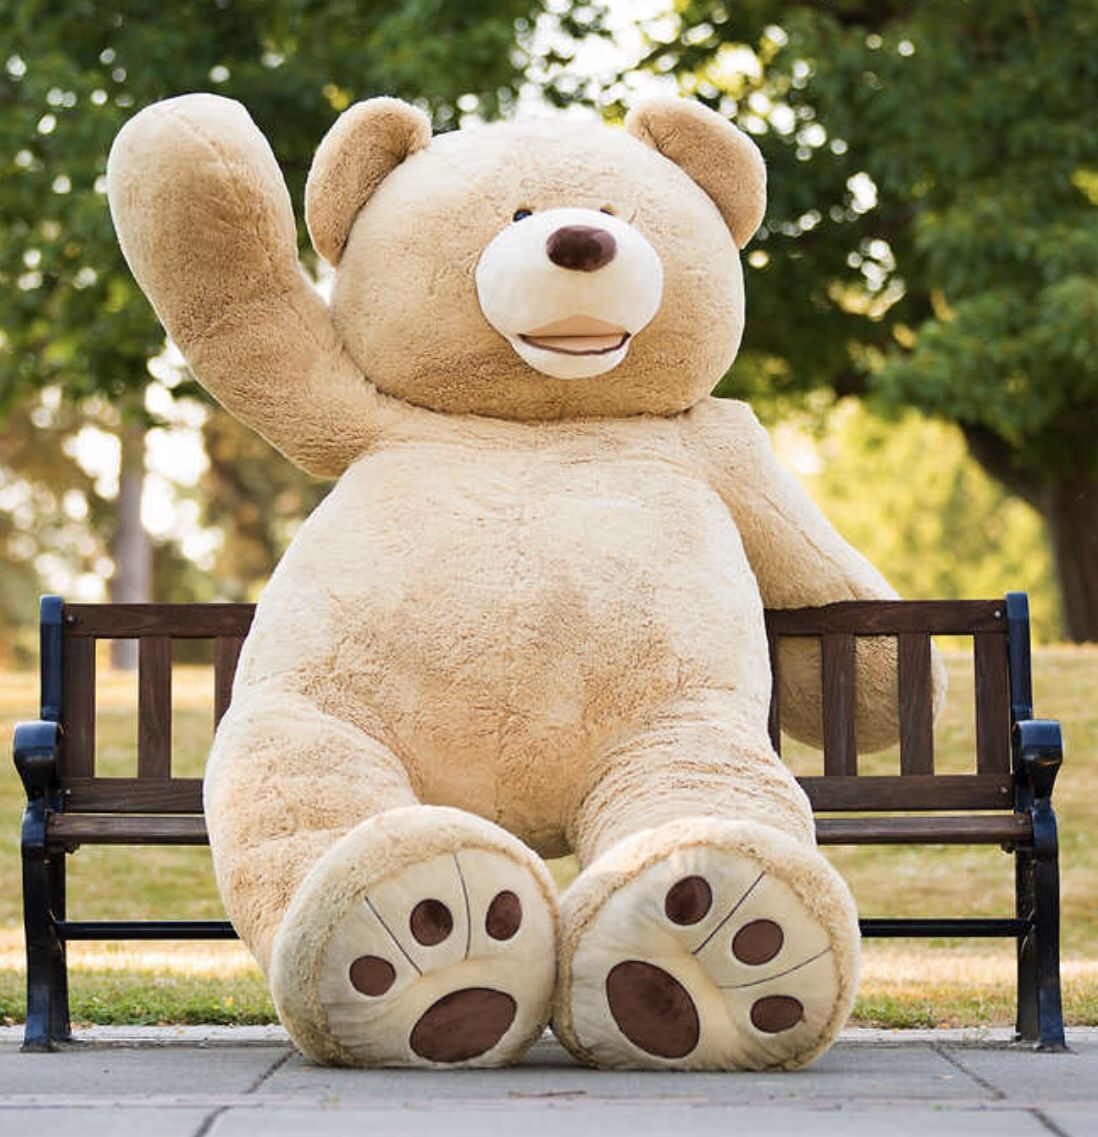 STUFFED TEDDY BEAR 6 FT